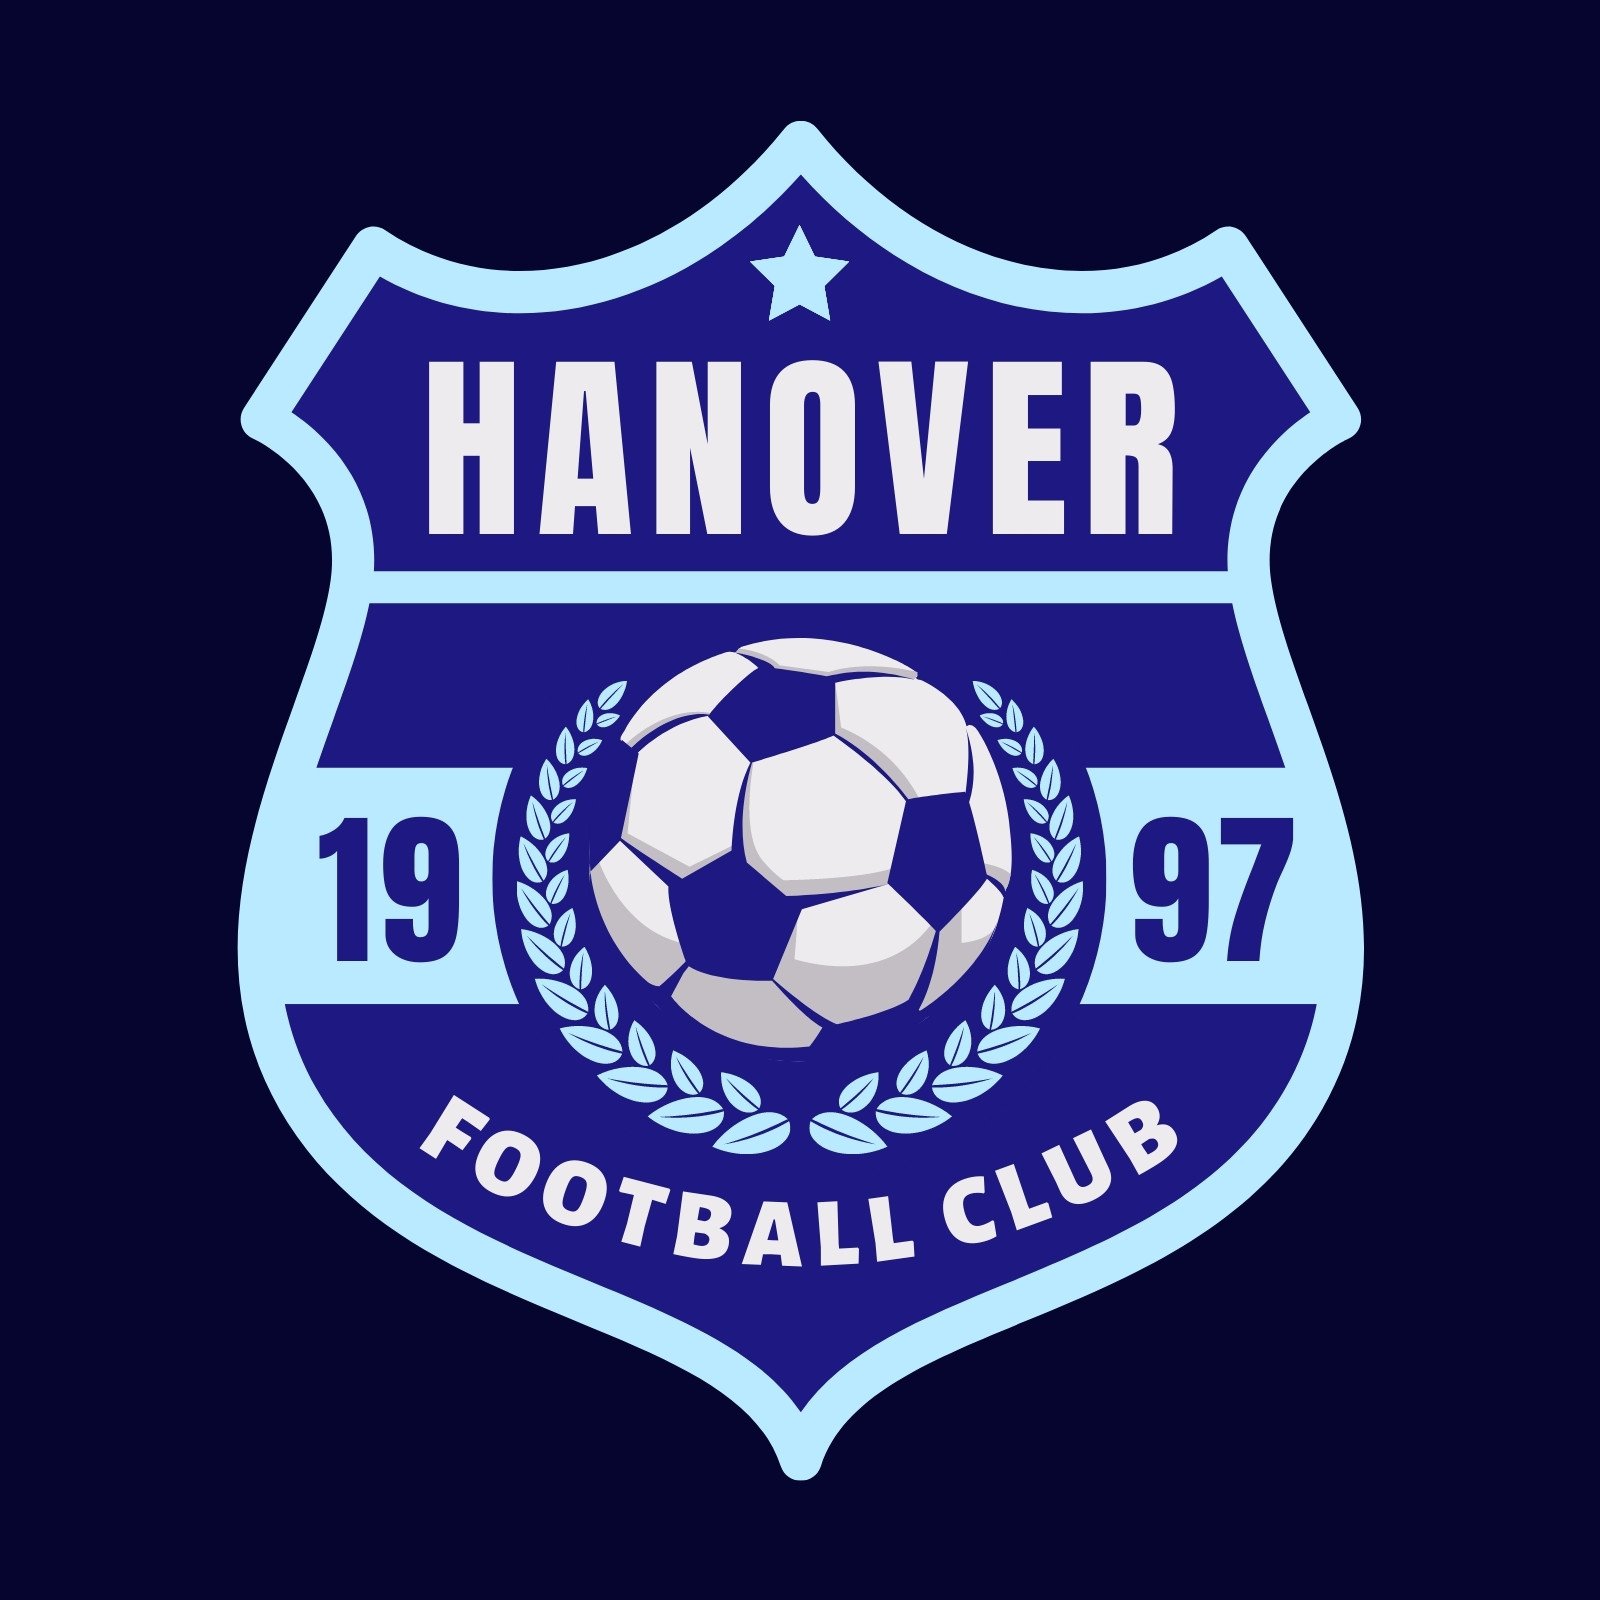 Free, printable, customizable soccer logo templates Canva